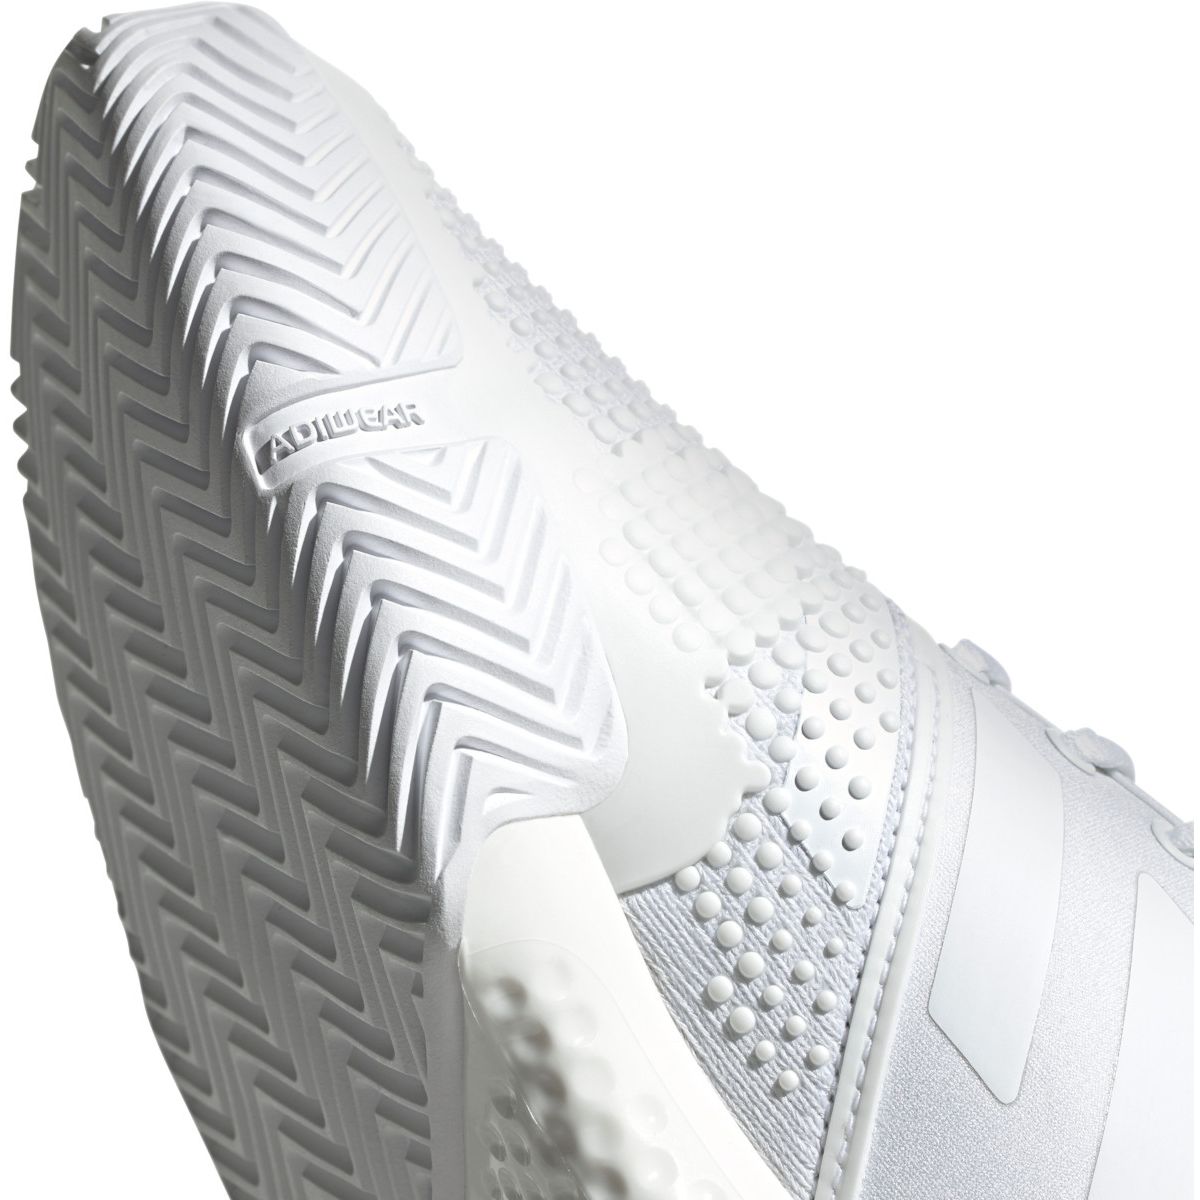 adidas Solecourt Boost X Parley Men's Tennis Shoes EF2071